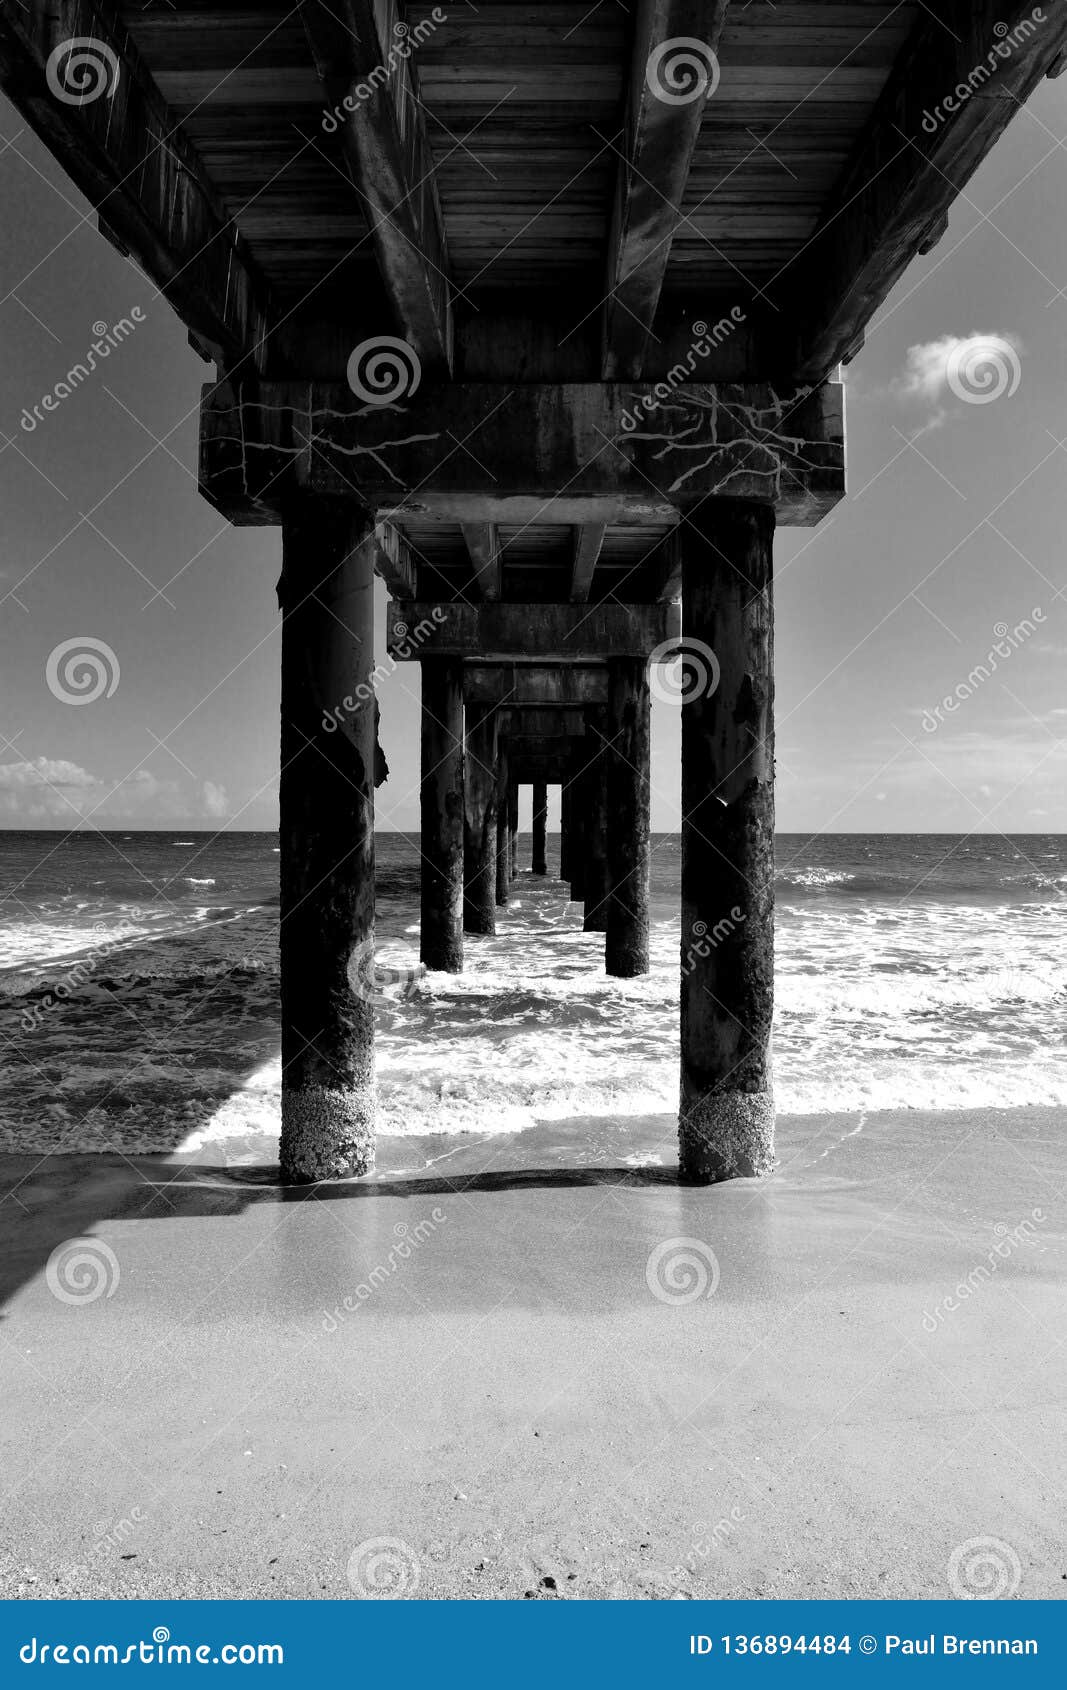 https://thumbs.dreamstime.com/z/underneath-fishing-pier-background-view-fishing-pier-below-st-augustine-florida-usa-136894484.jpg